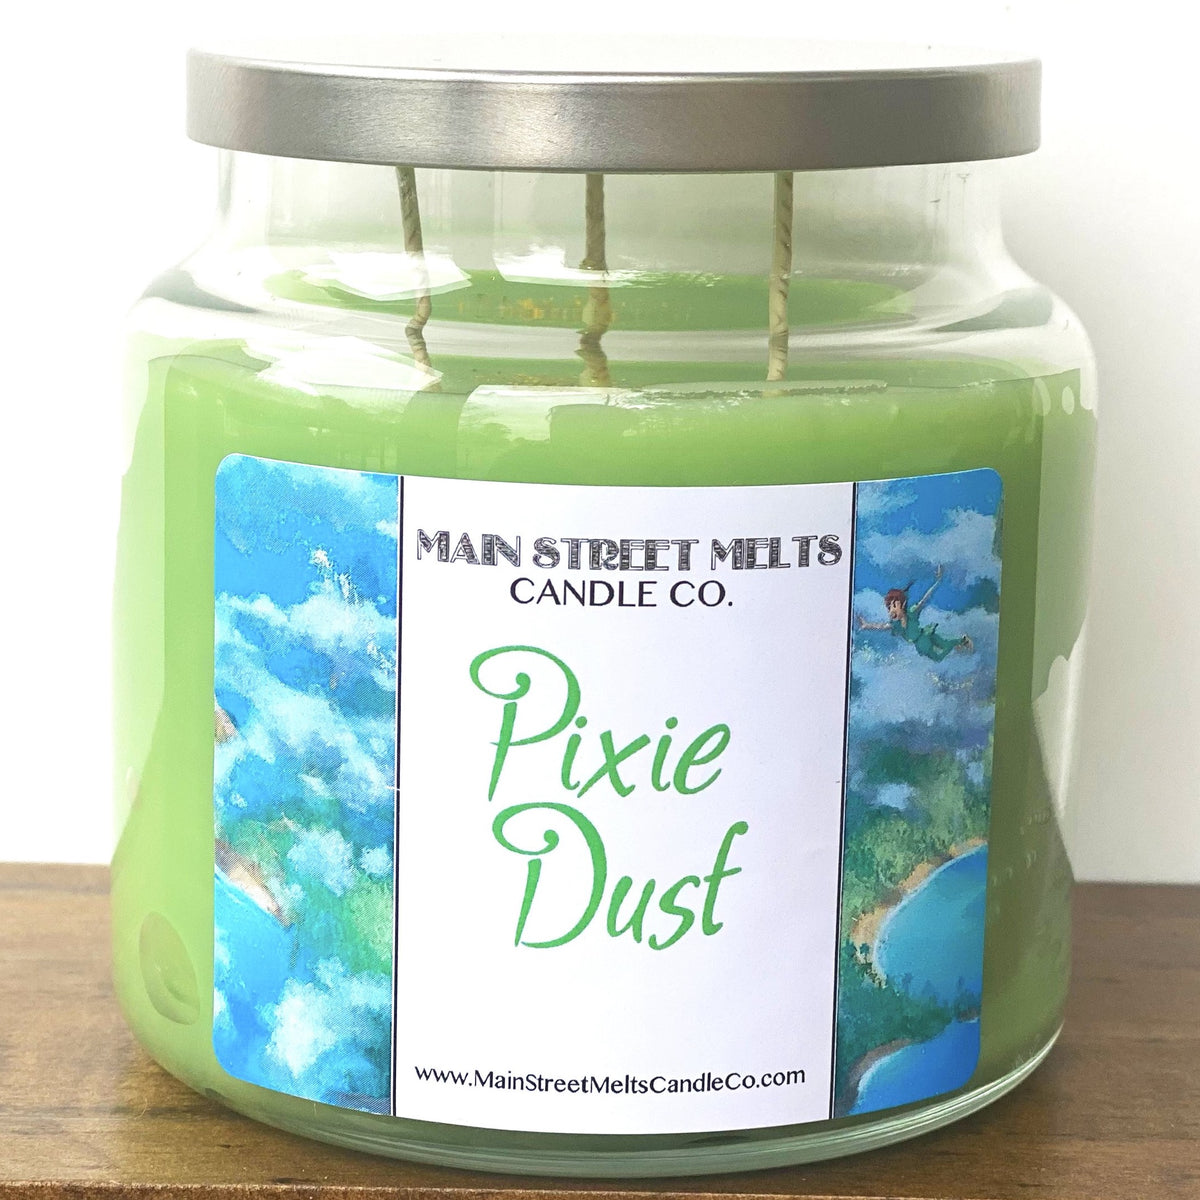 Pixie Dust Fragrance – Magic Candle Company